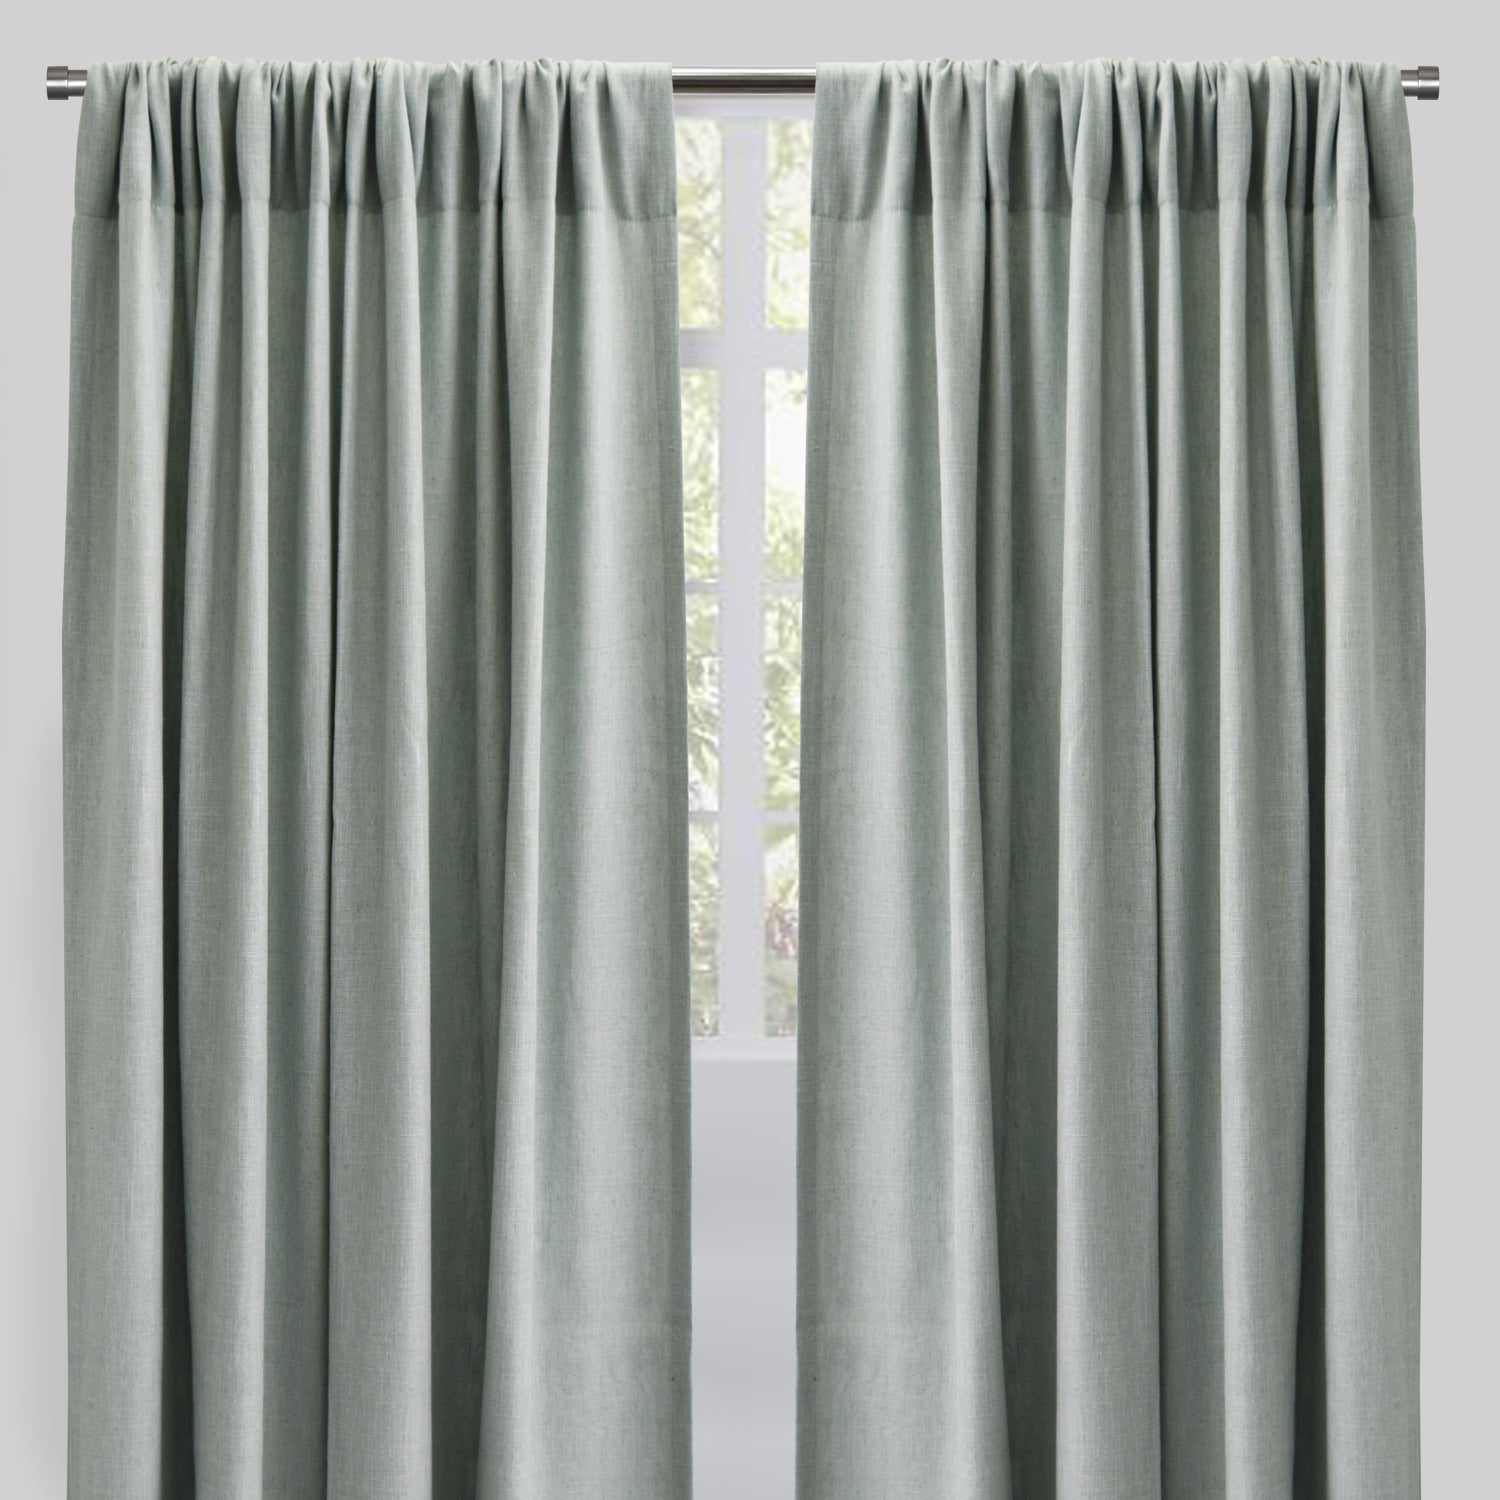 Saint Curtain Panels | Solid Linen Blend